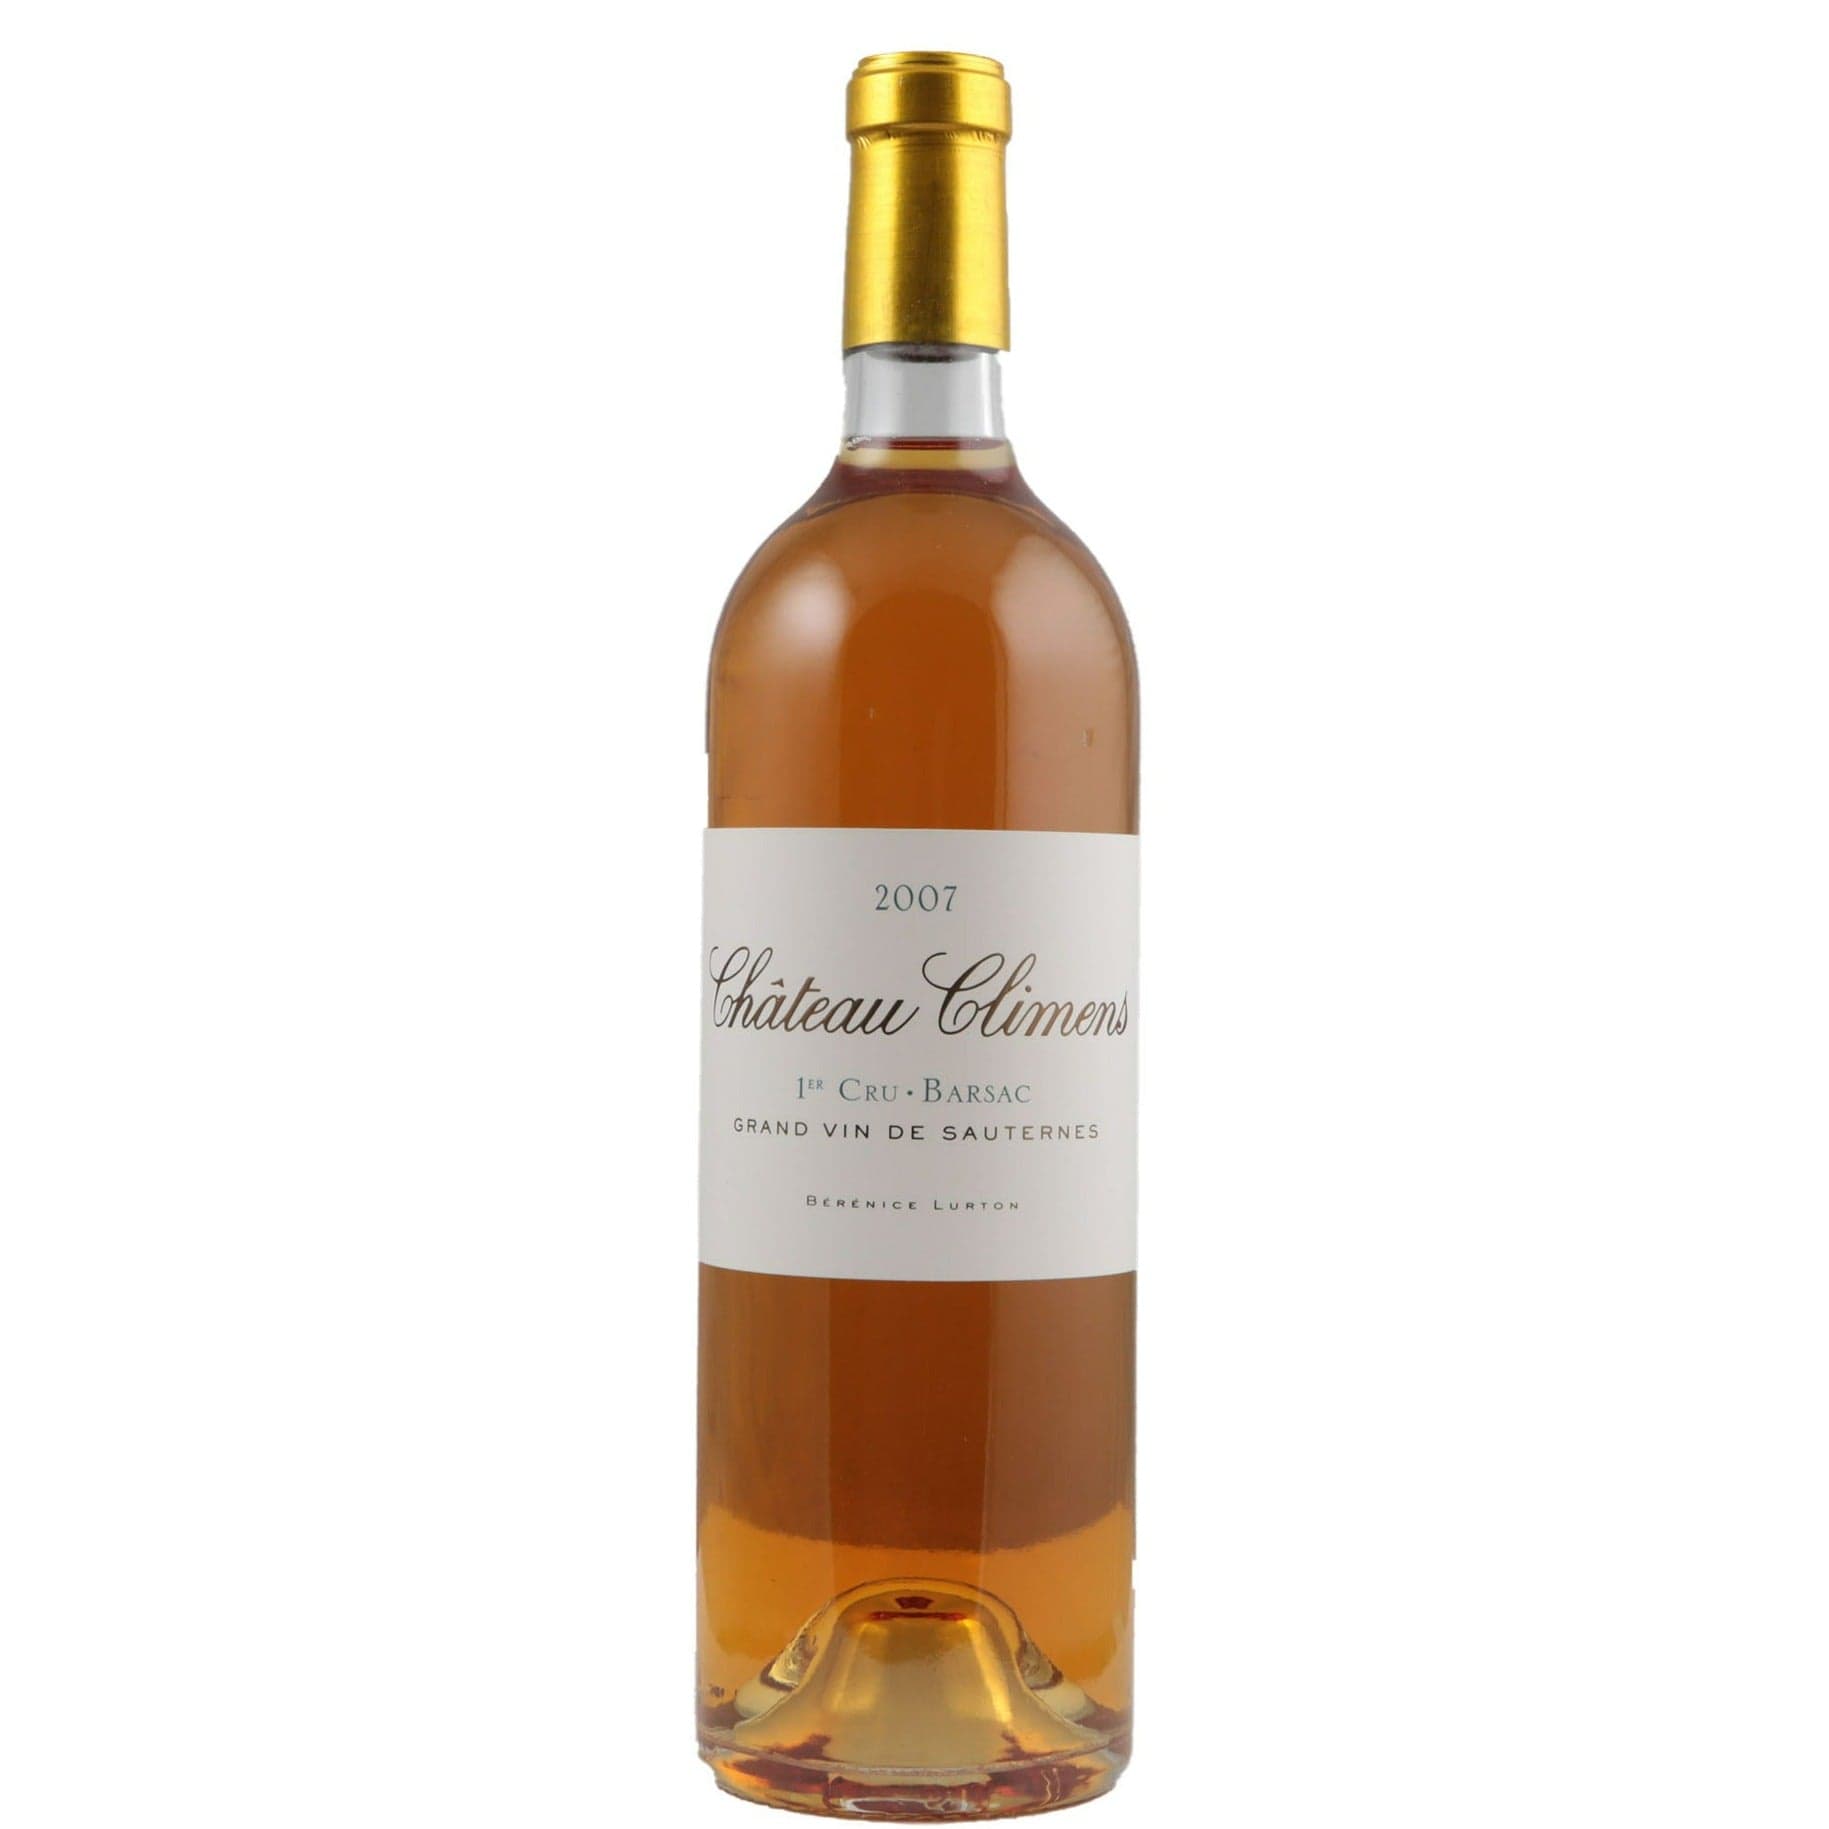 Single bottle of Sweet white wine Ch. Climens, 1st Growth Premier Cru Classe, Barsac, 2007 100% Semillon